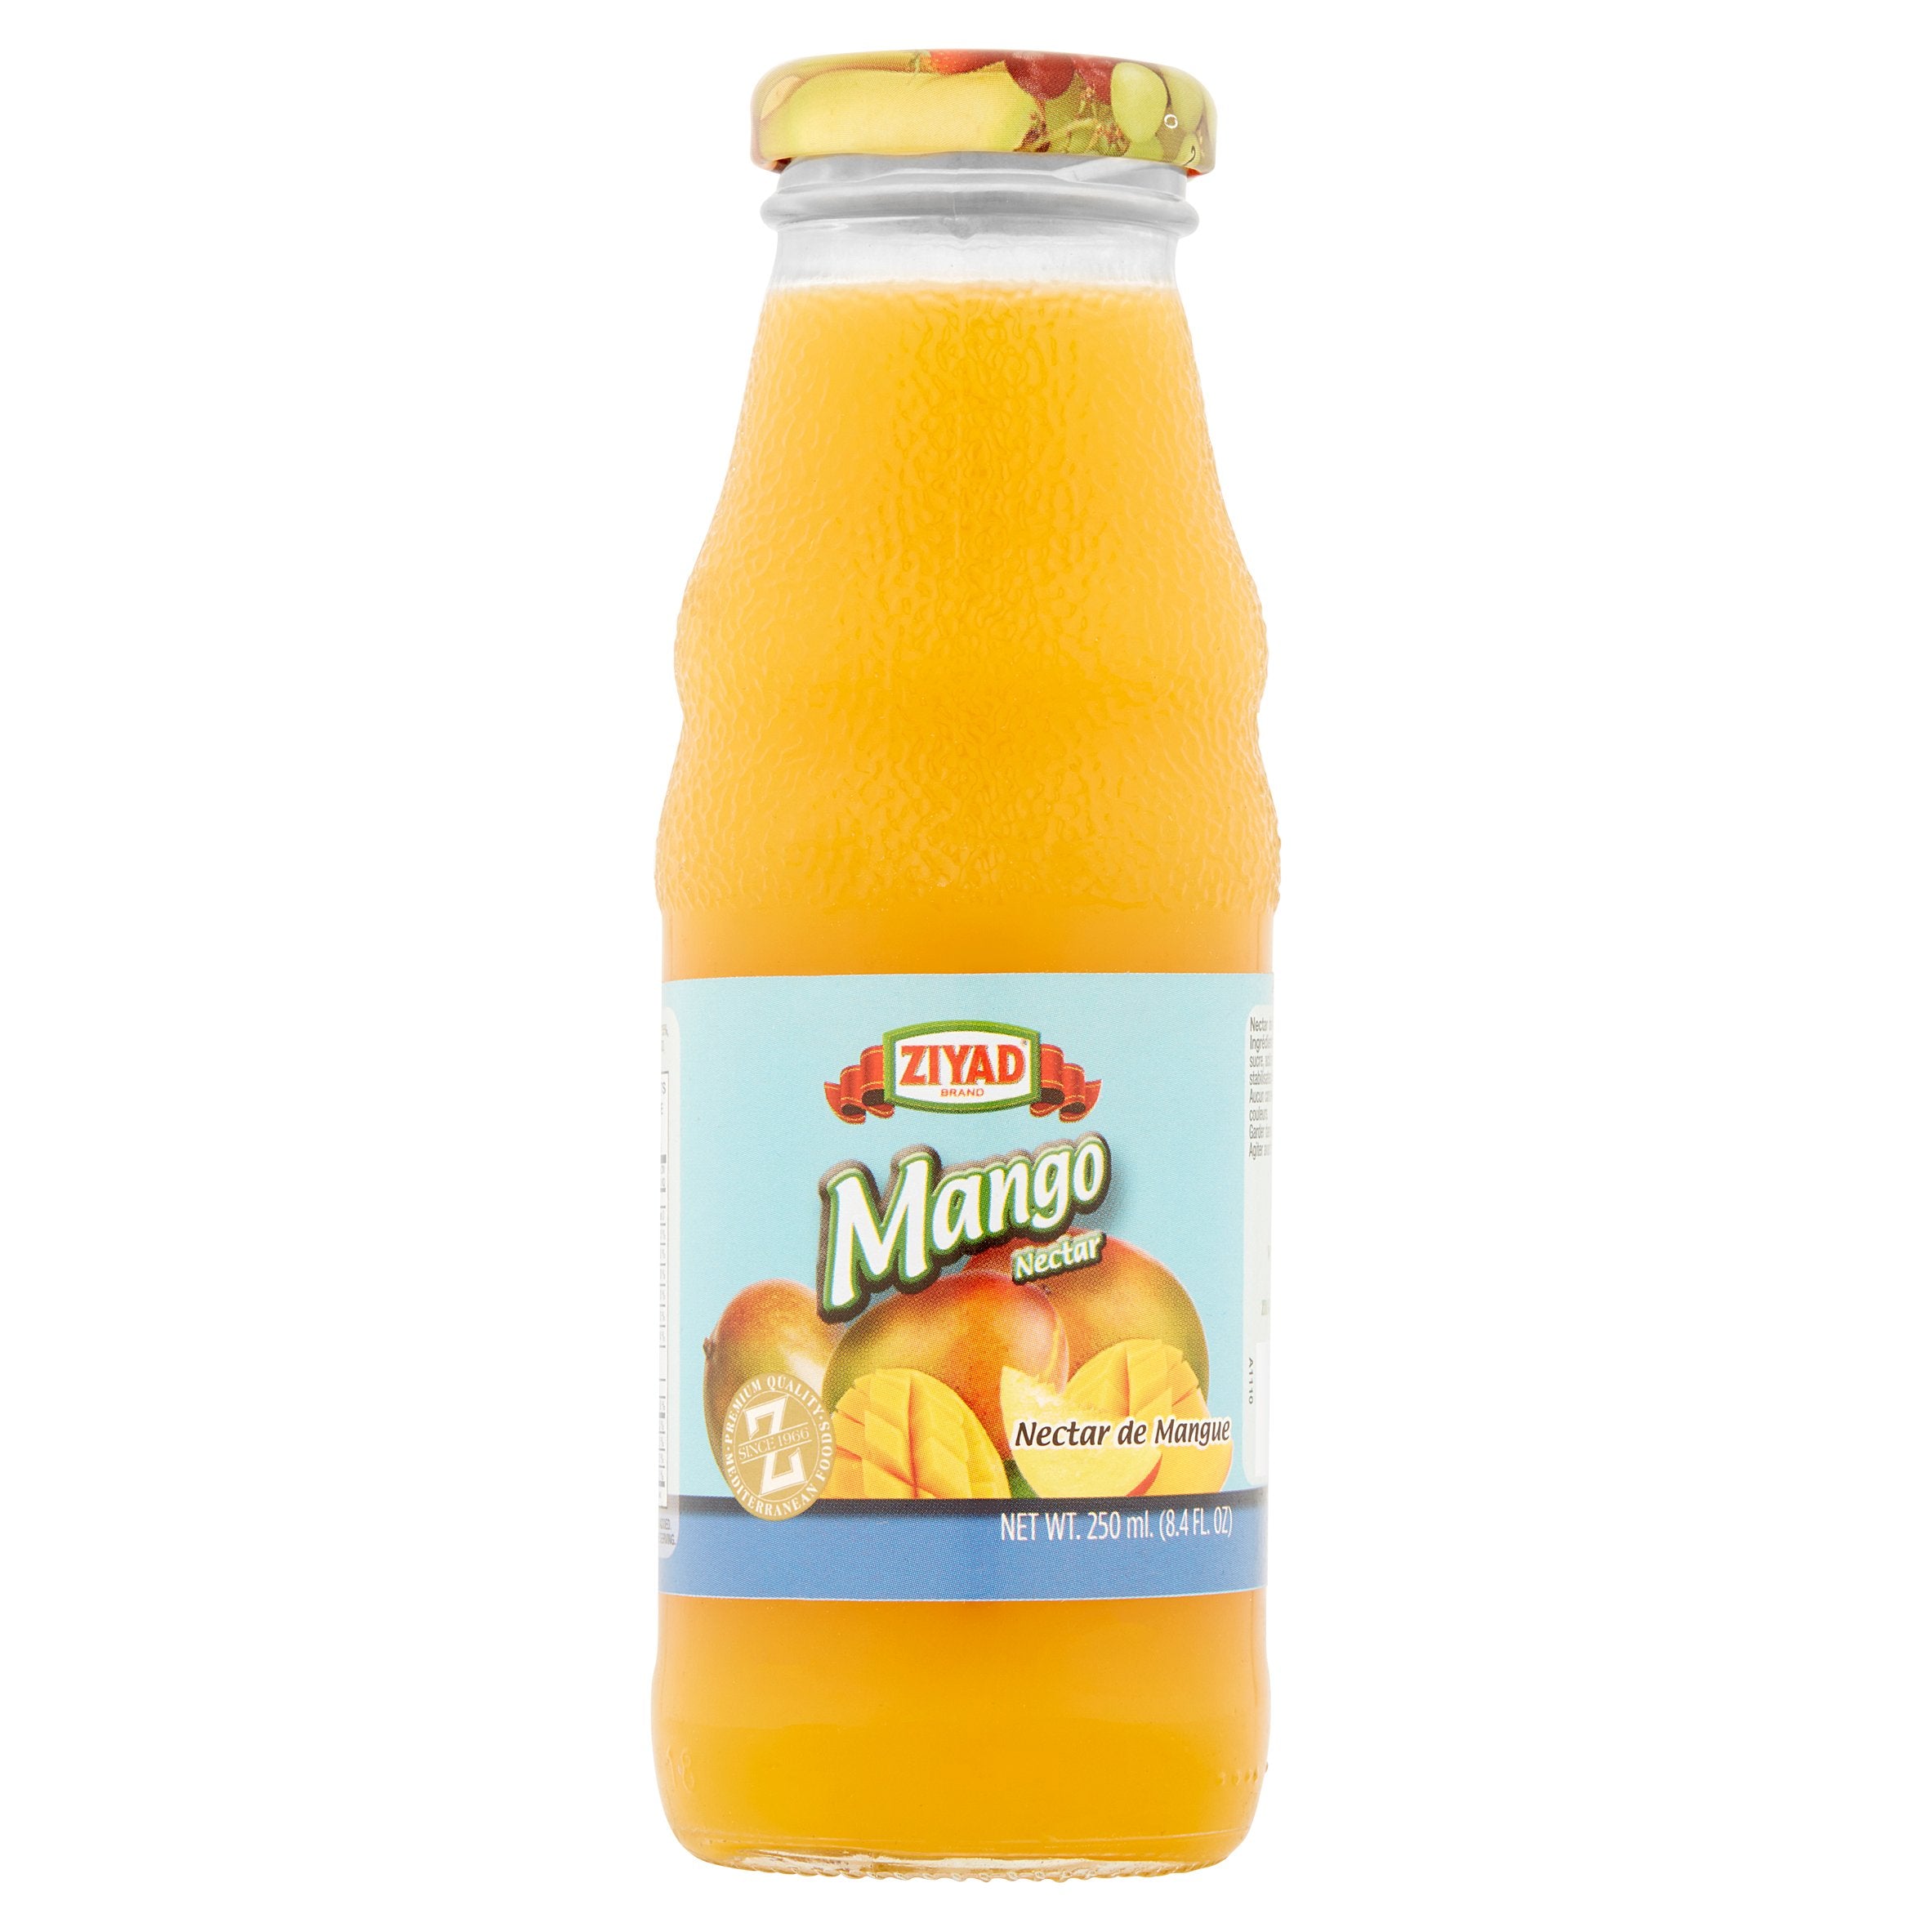 ziyad-mango-nectar-8-4-oz-250ml-glass-bottle